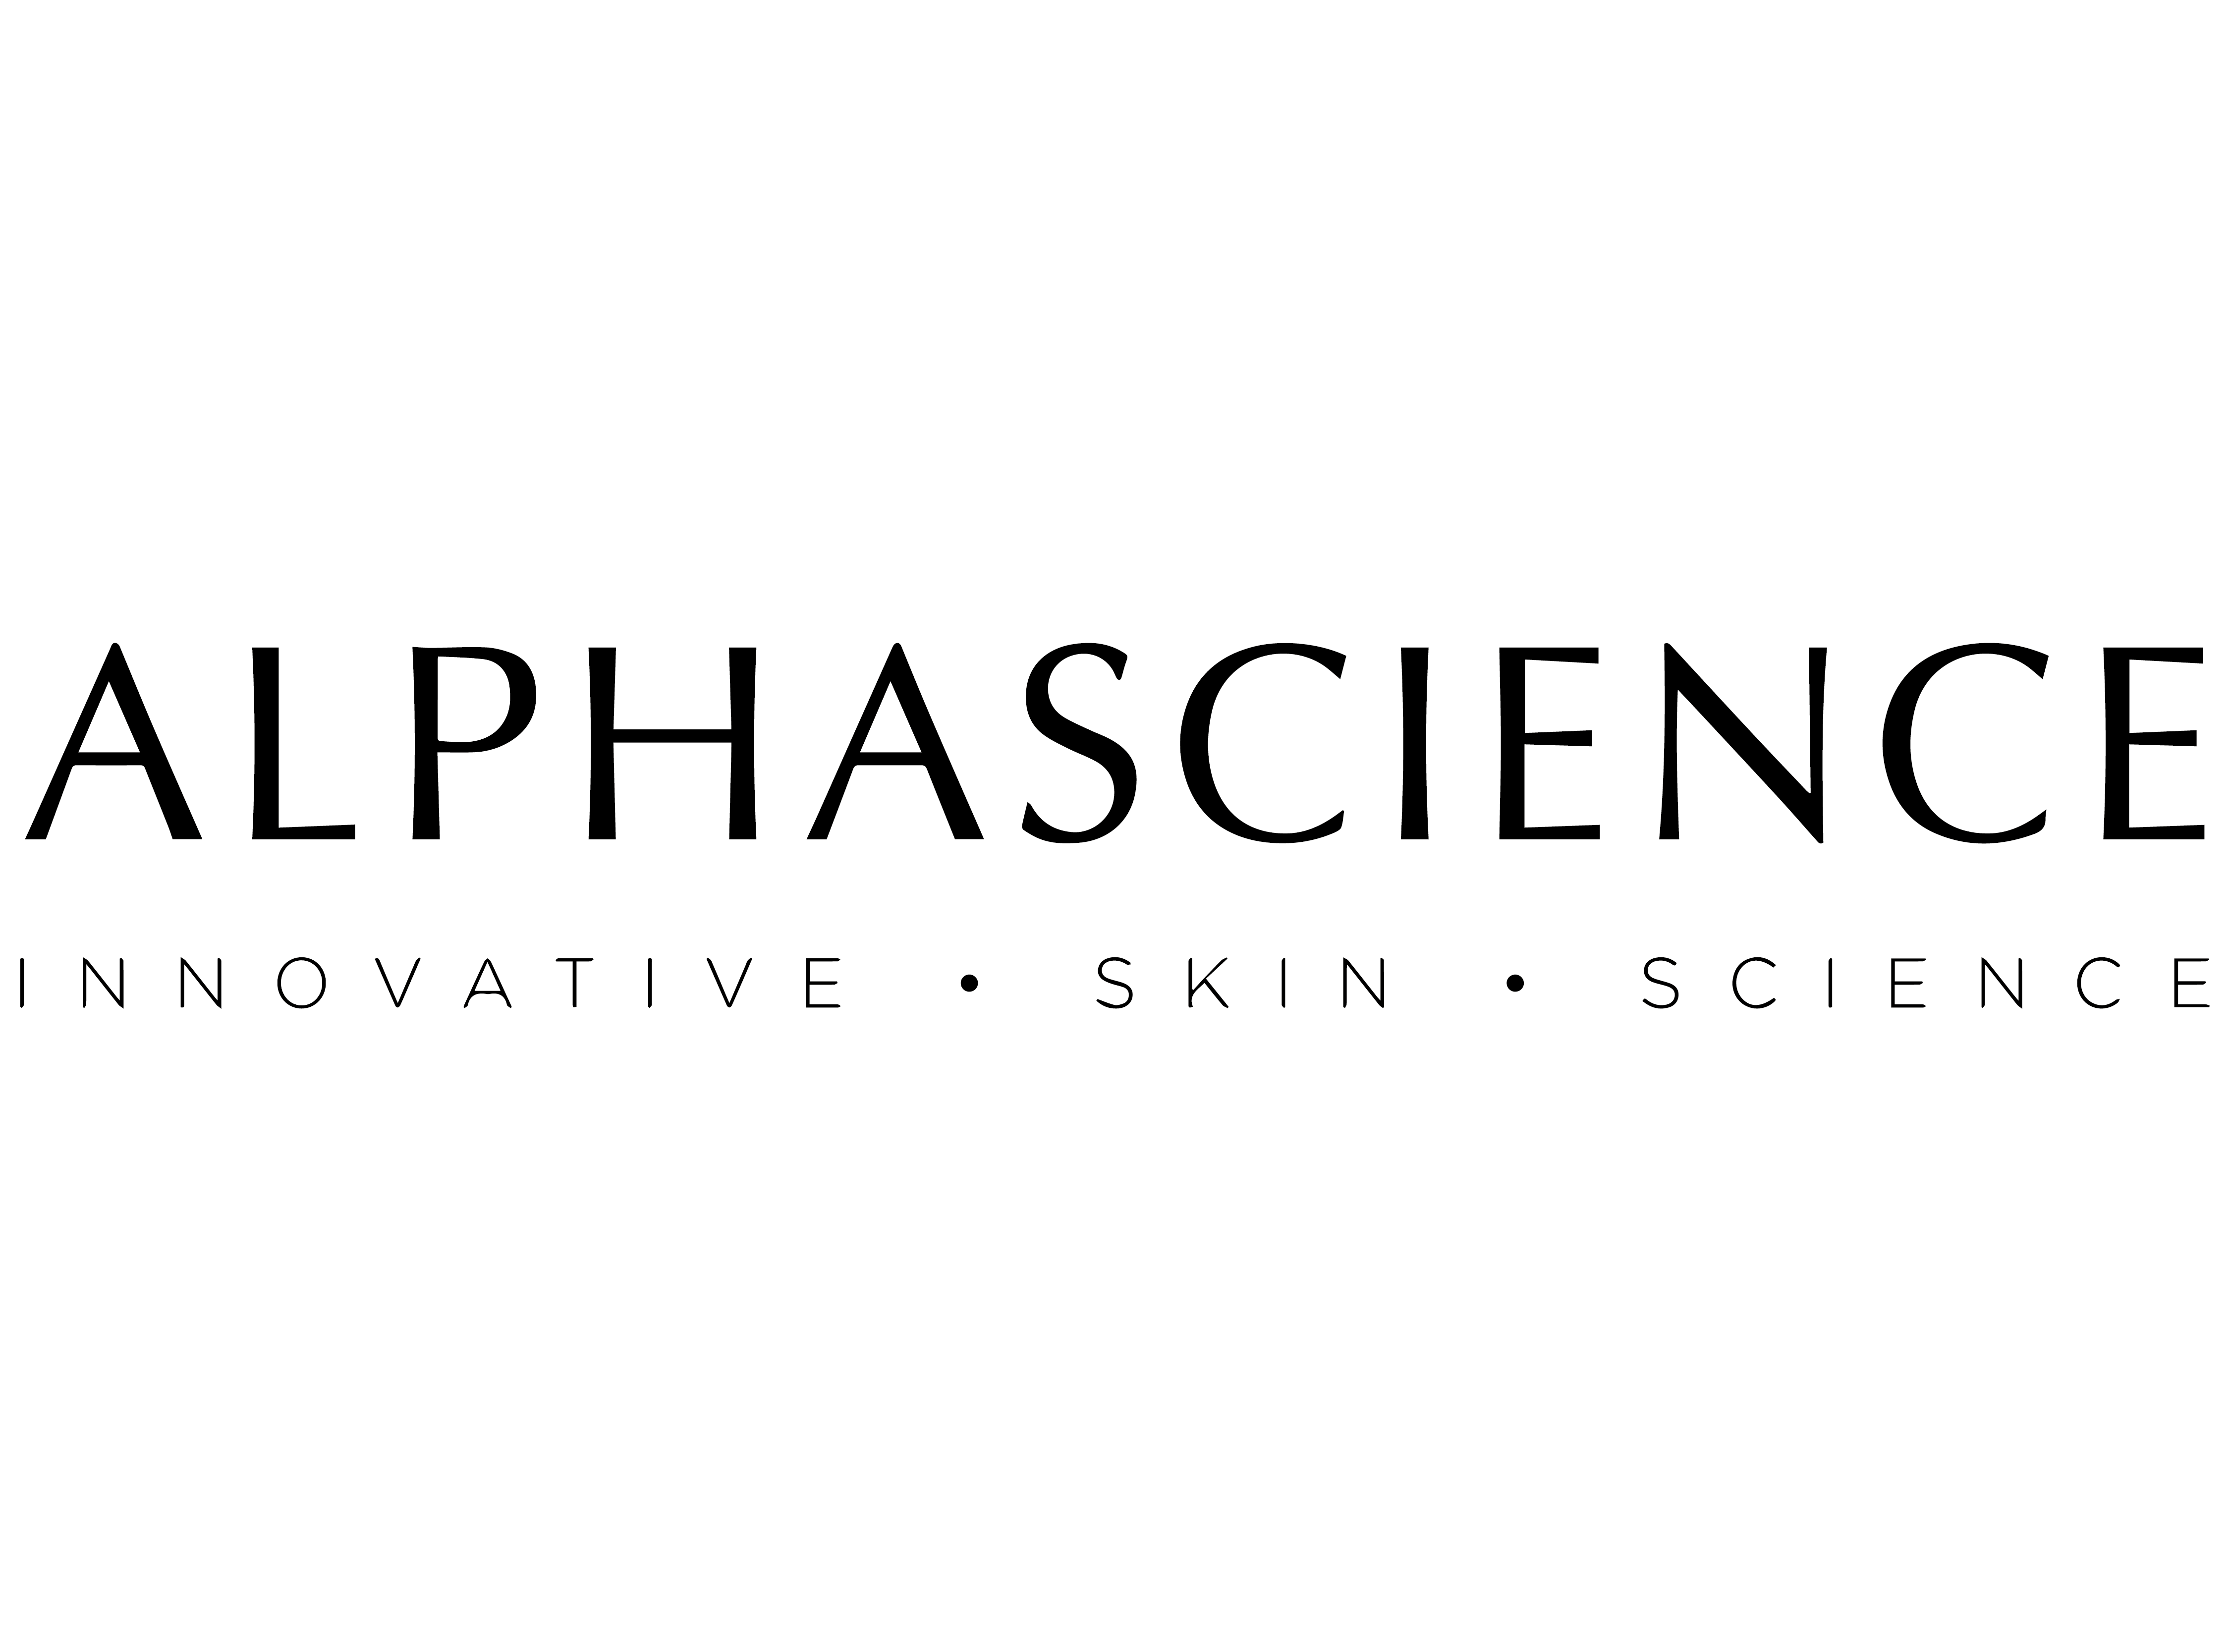 Alphascience logo